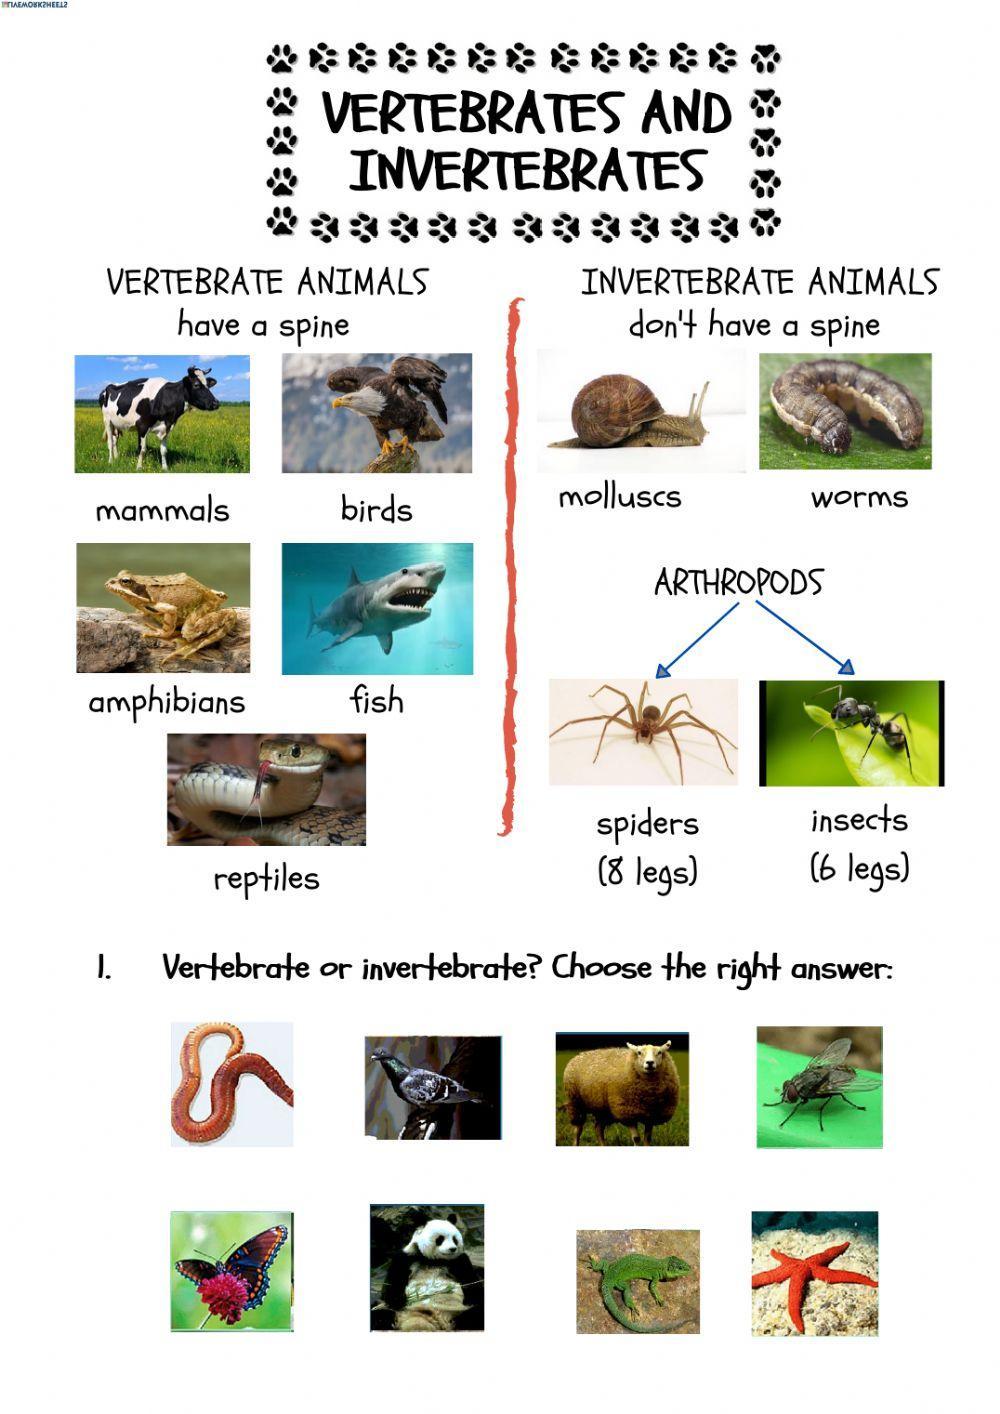 Vertebrates or invertebrates?